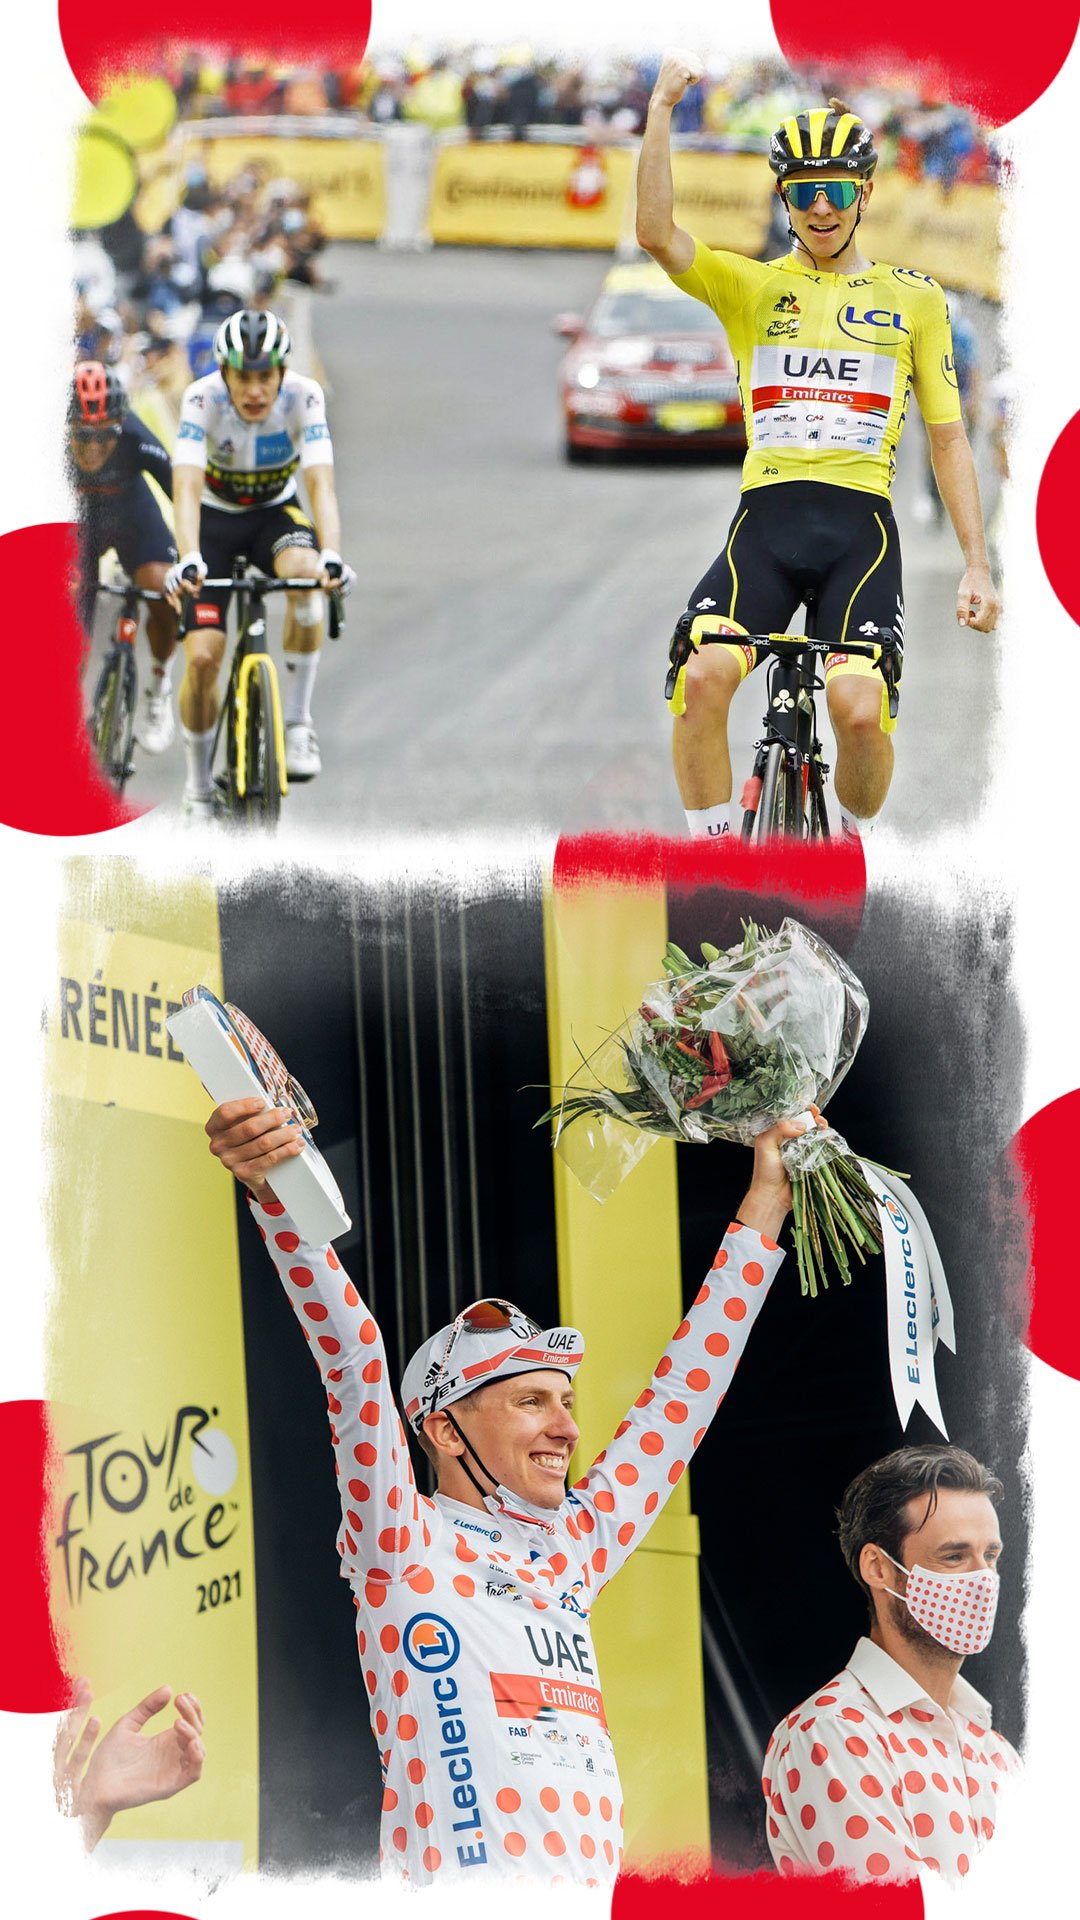 MET Helmets and Tadej Pogačar winner of the 2021 Tour de France